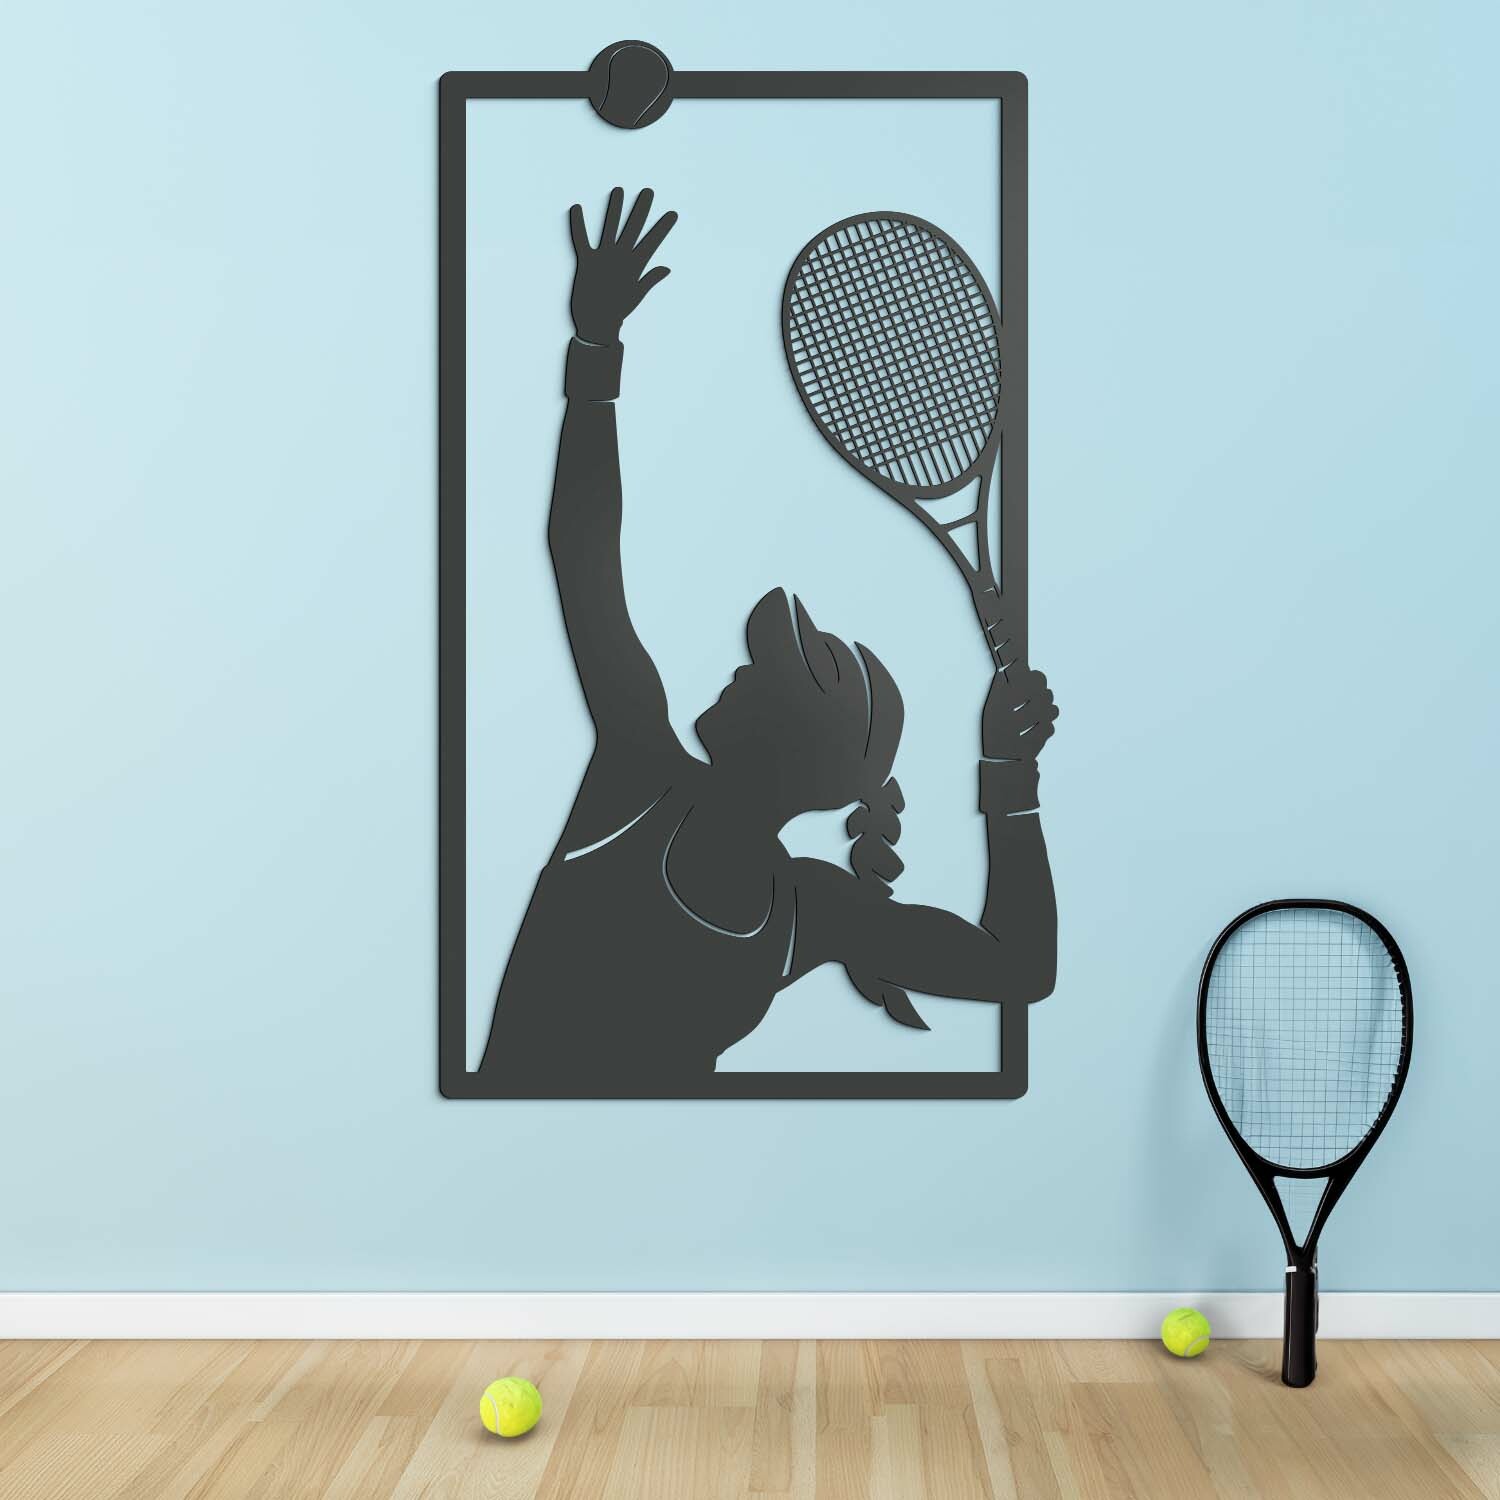 Drevený obraz športu - Tenistka